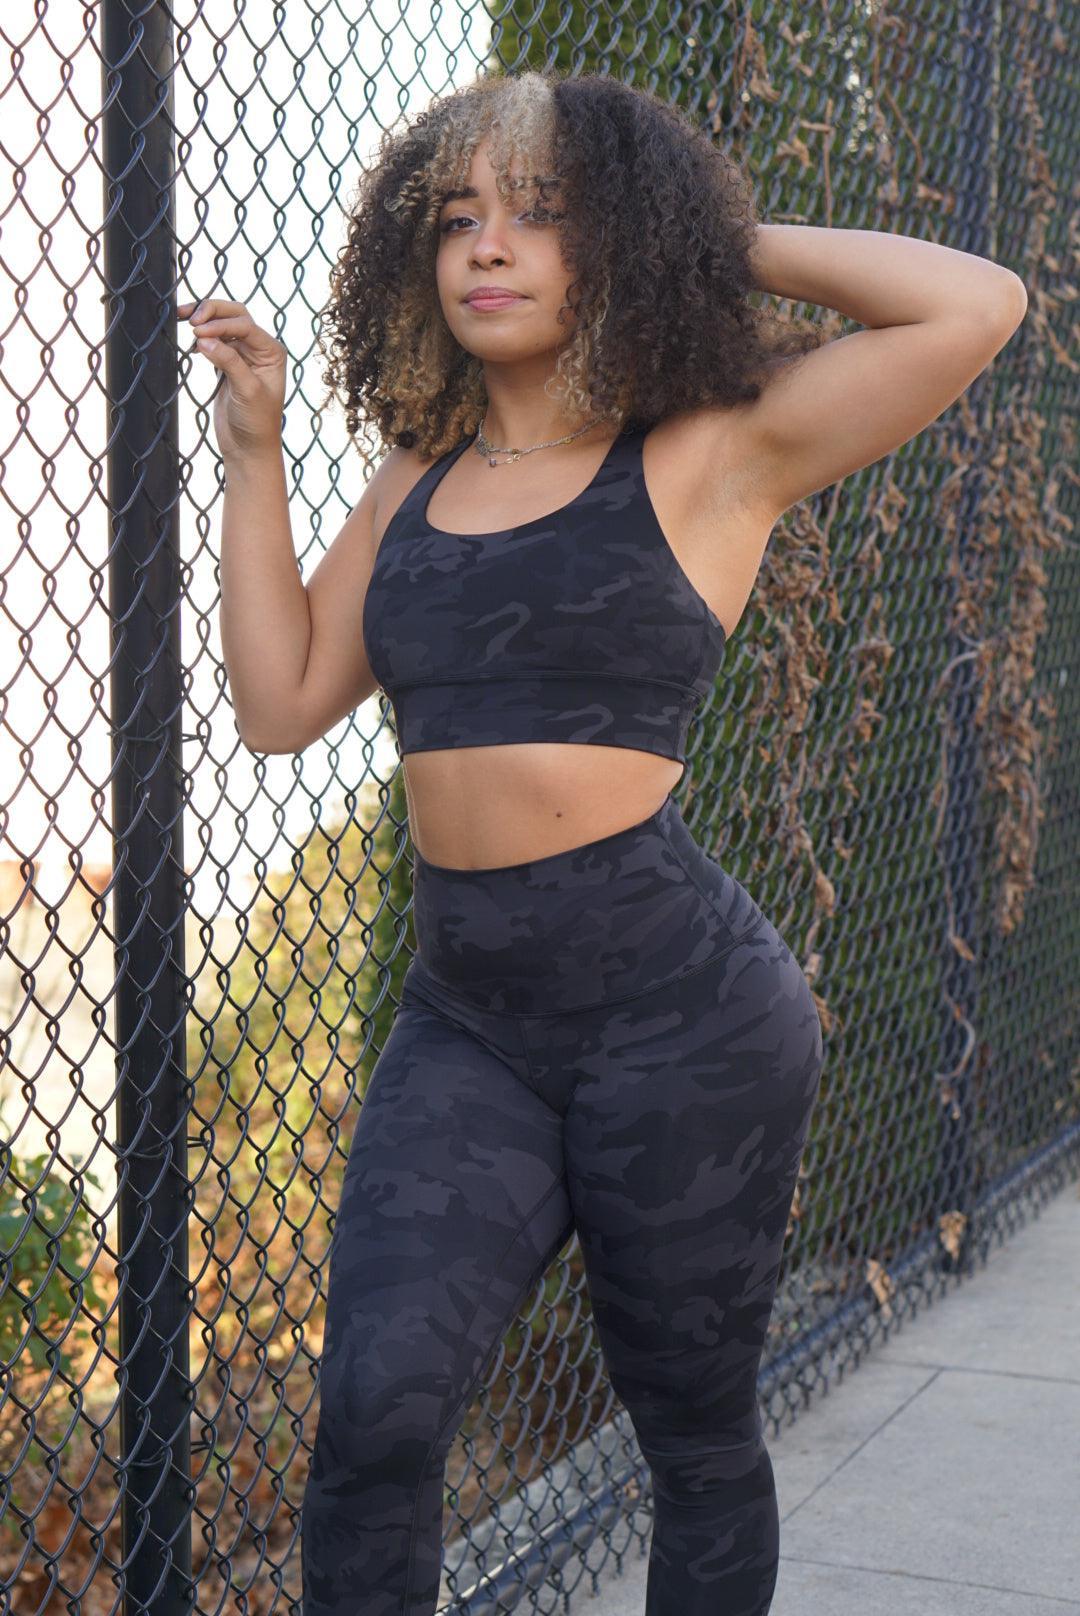 Nike Universa Women's Medium-Support High-Waisted 7/8 Camo Leggings with  Pockets. Nike.com